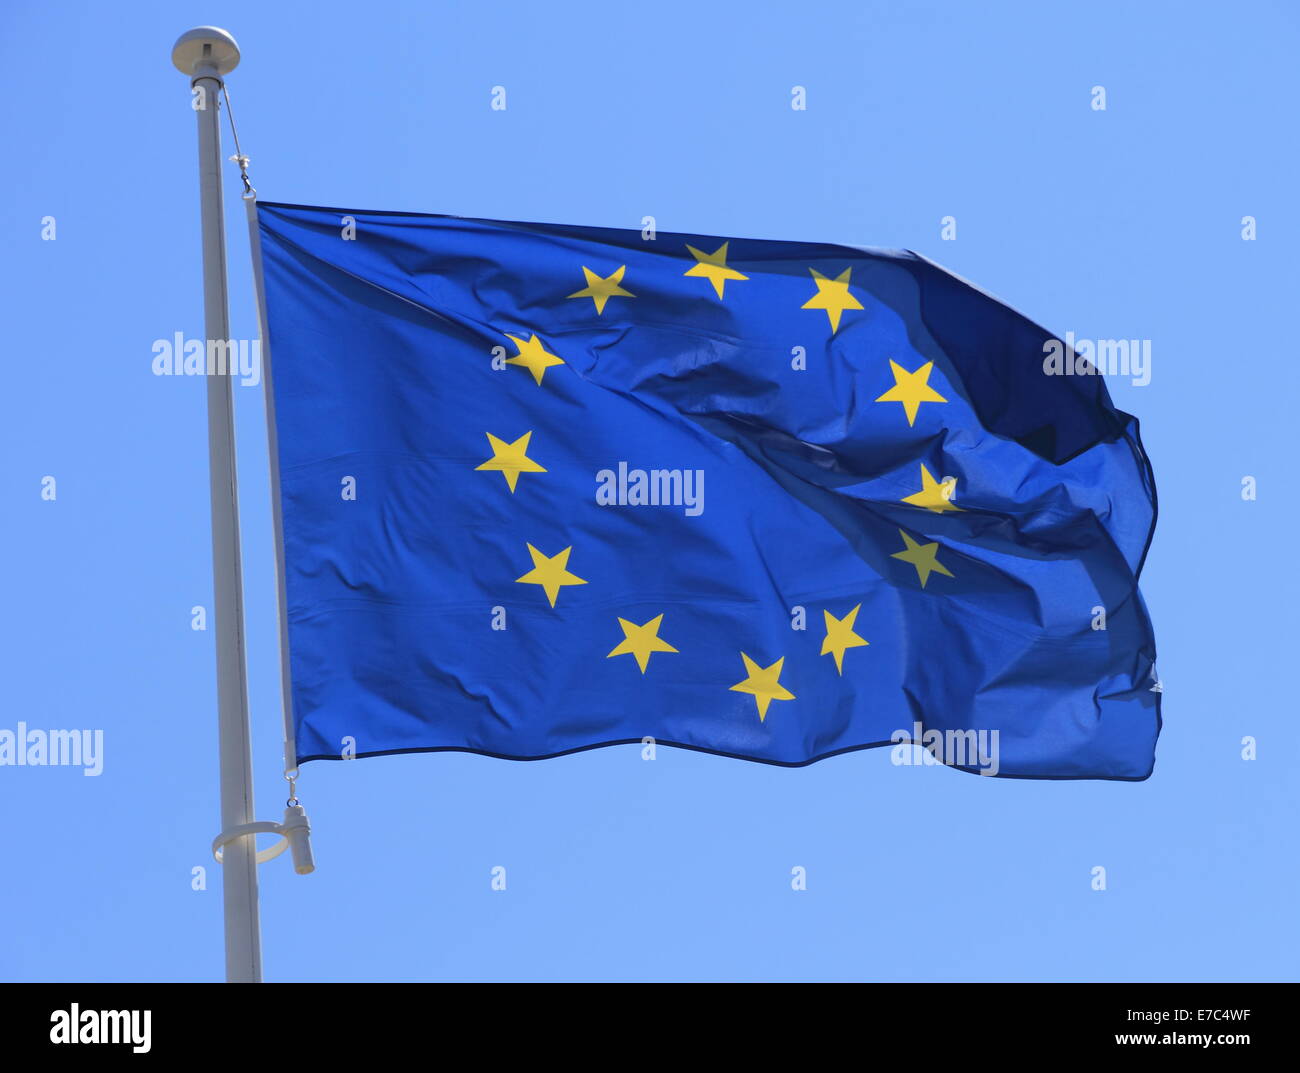 European flag with twelve yellow stars on blue sky, close up Stock Photo